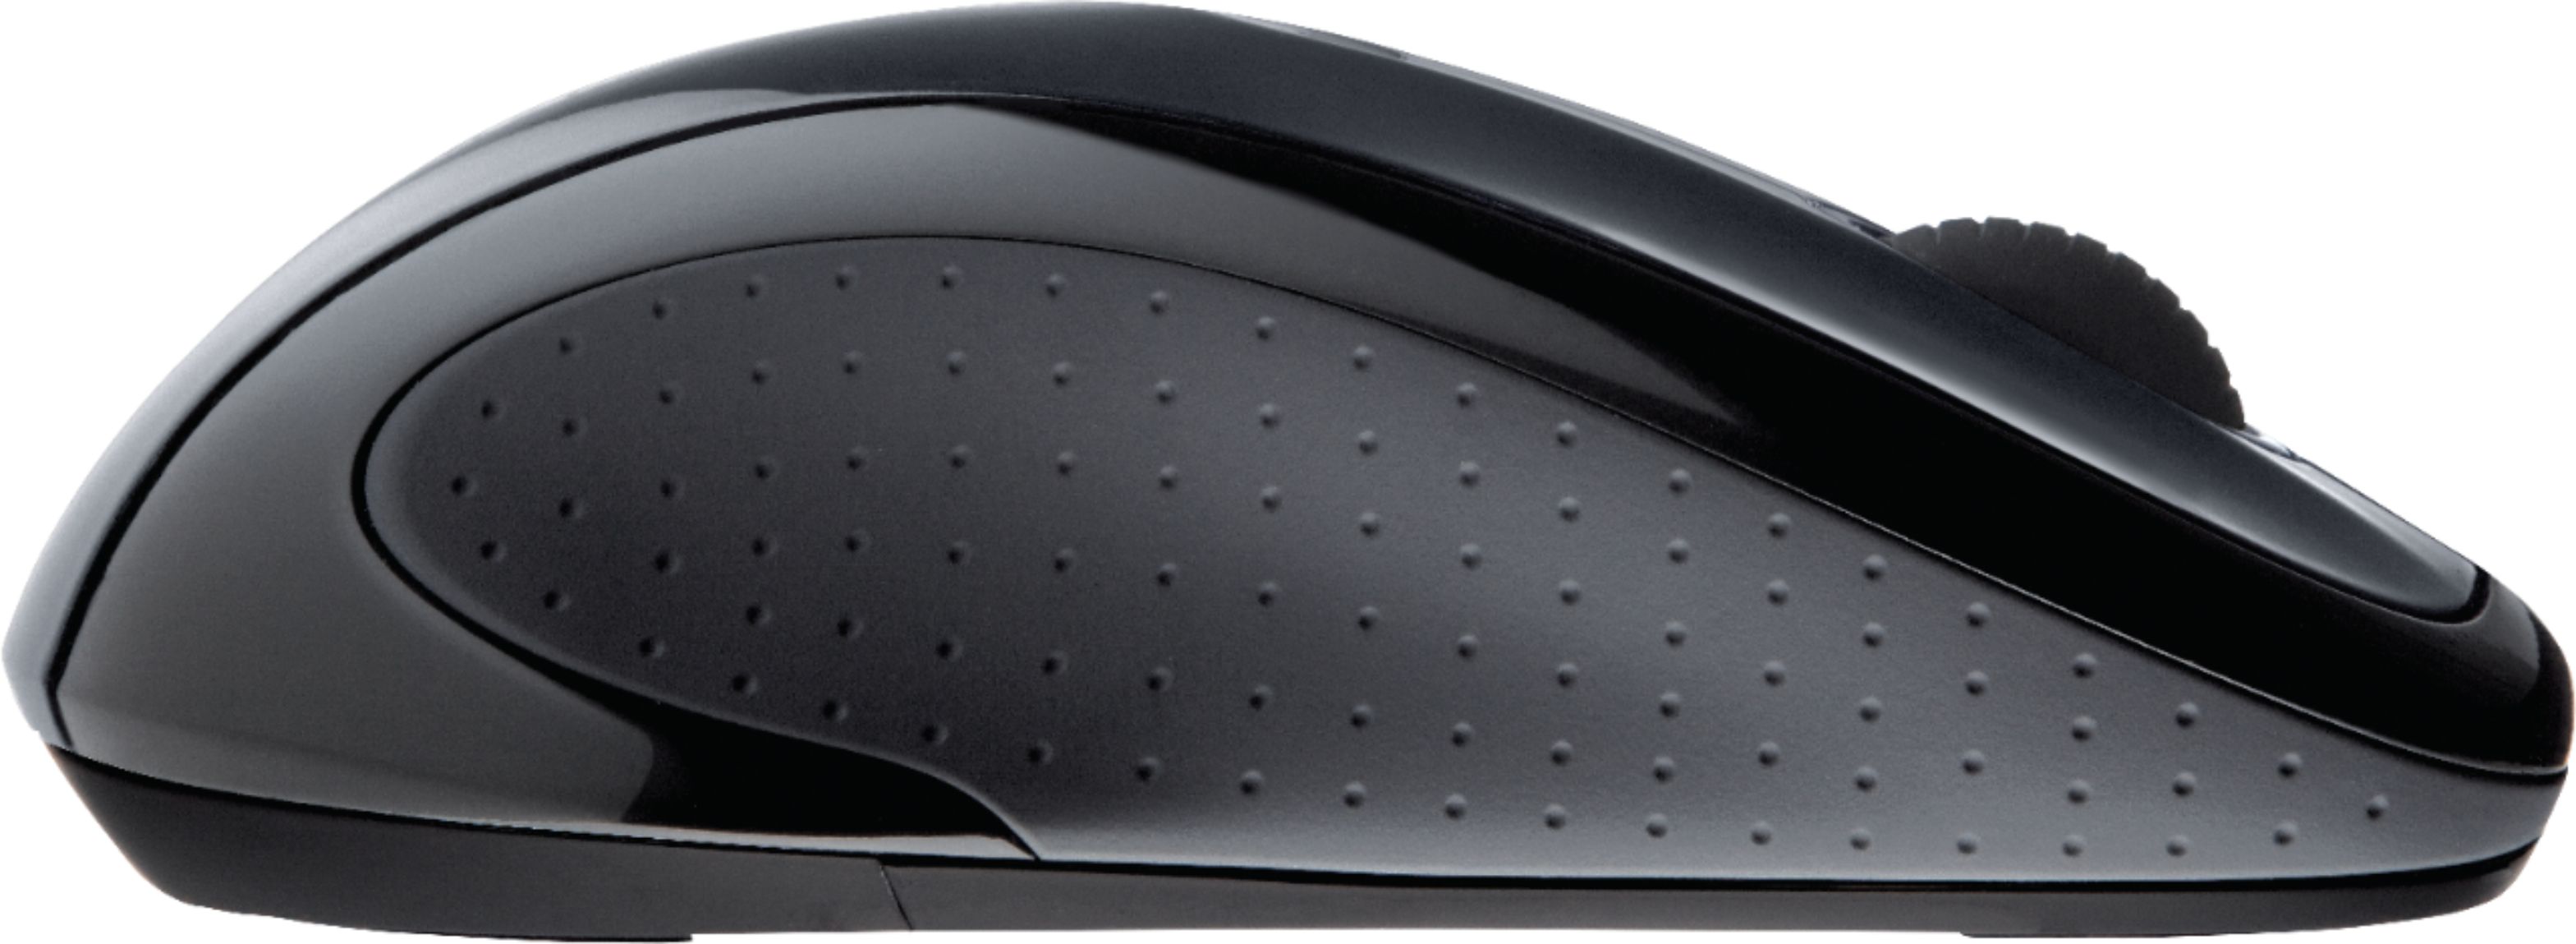 Logitech M510 Wireless Optical Ambidextrous Mouse Silver/Black 910